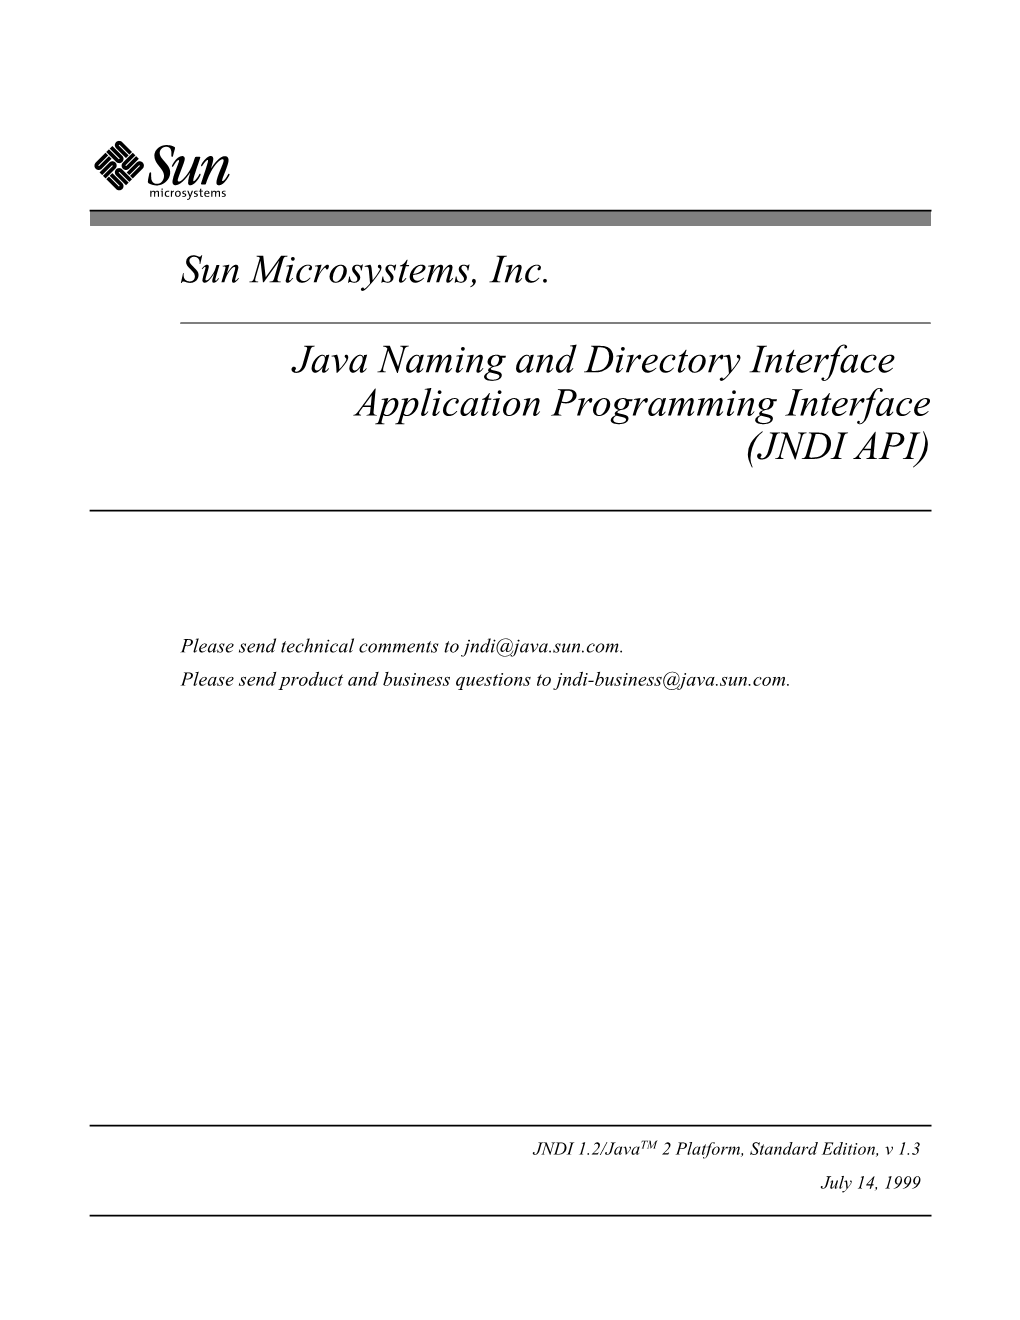 Java Naming and Directory Interface Application Programming Interface